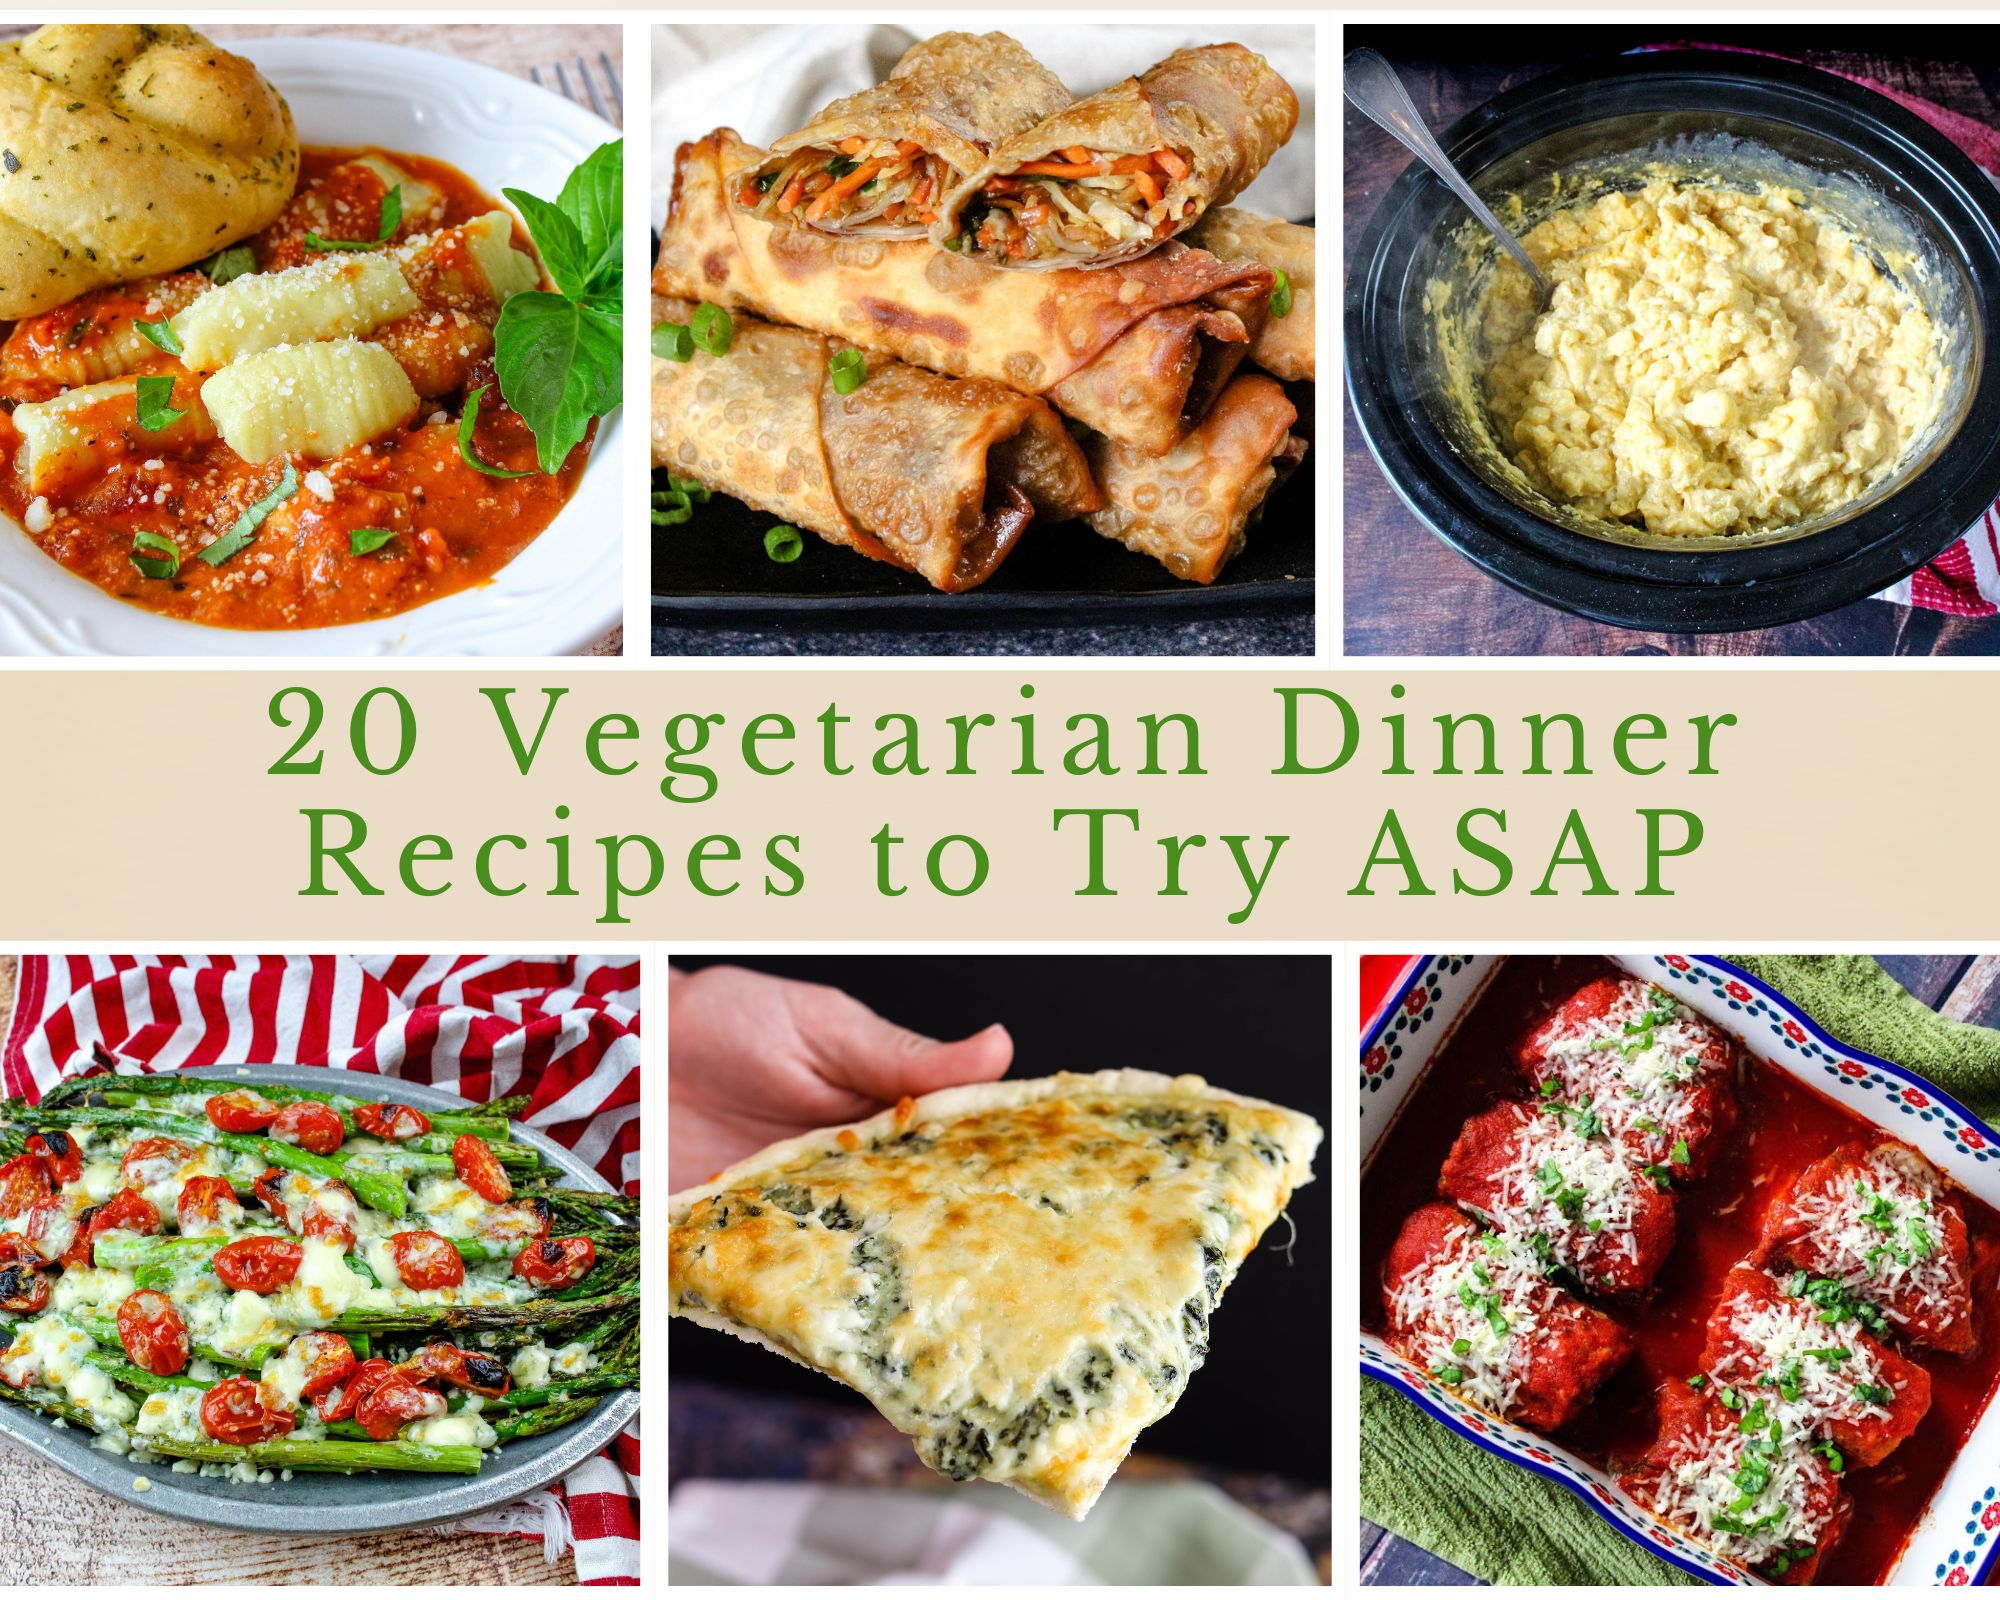 20 Vegetarian Dinner Recipes to Try ASAP